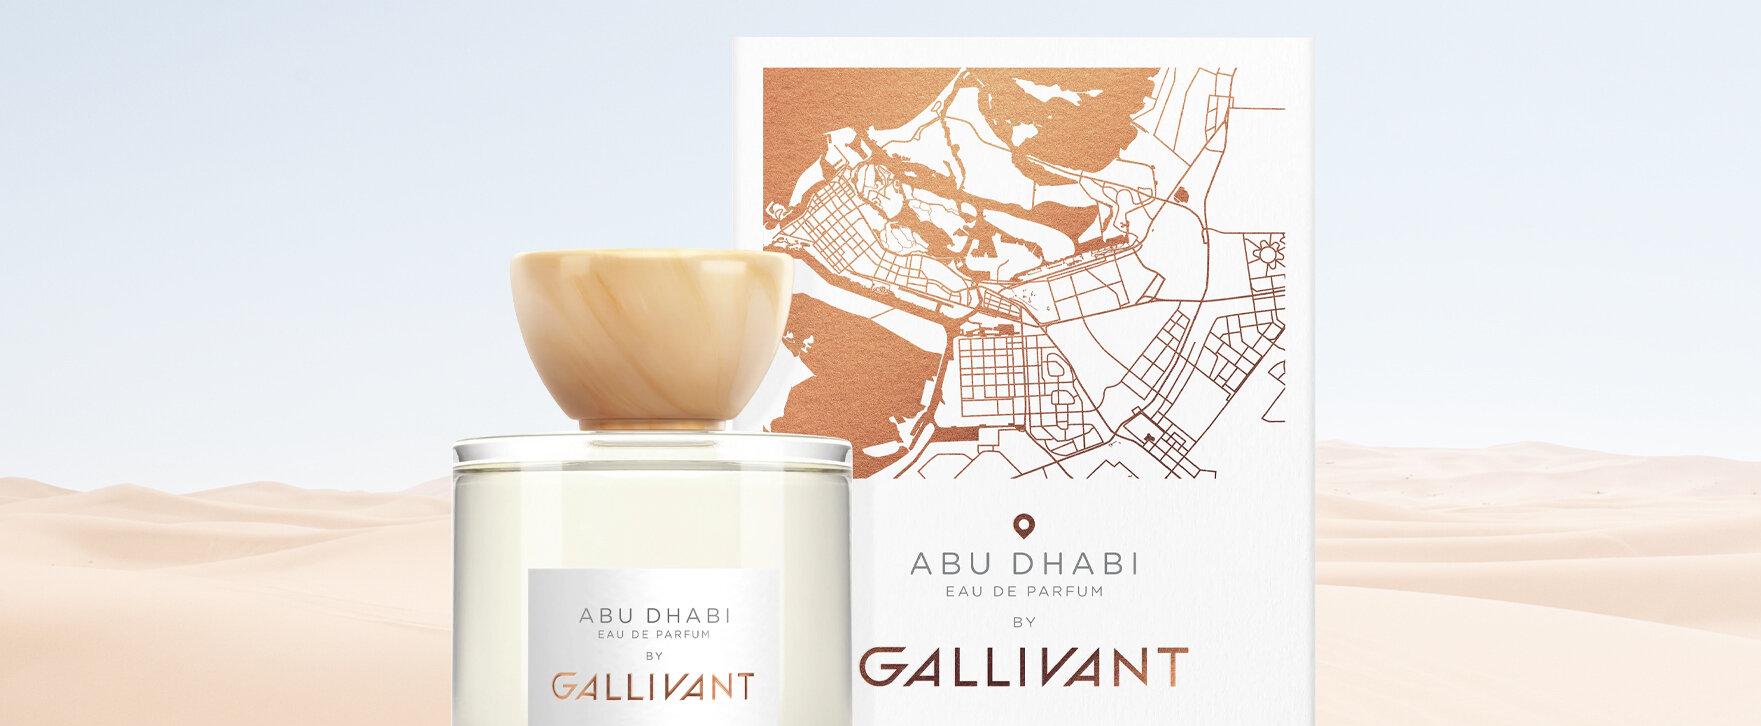 “Abu Dhabi” - New Creation by Gallivant Takes You to the Hot Rub Al Khali Desert